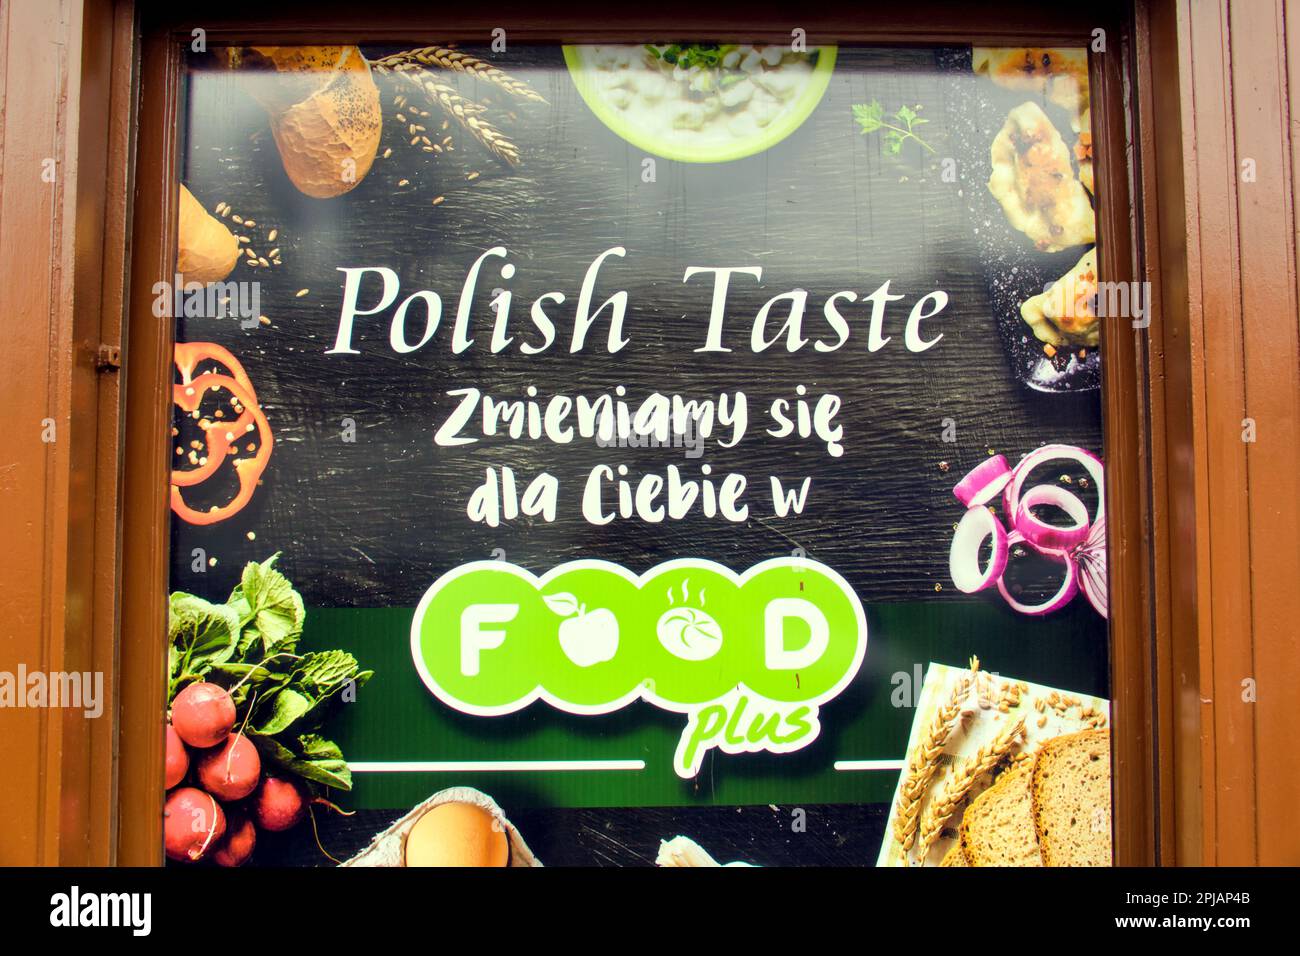 polish taste  mini market food store Polish Taste 21 Hyndland St Glasgow, Scotland, UK Stock Photo